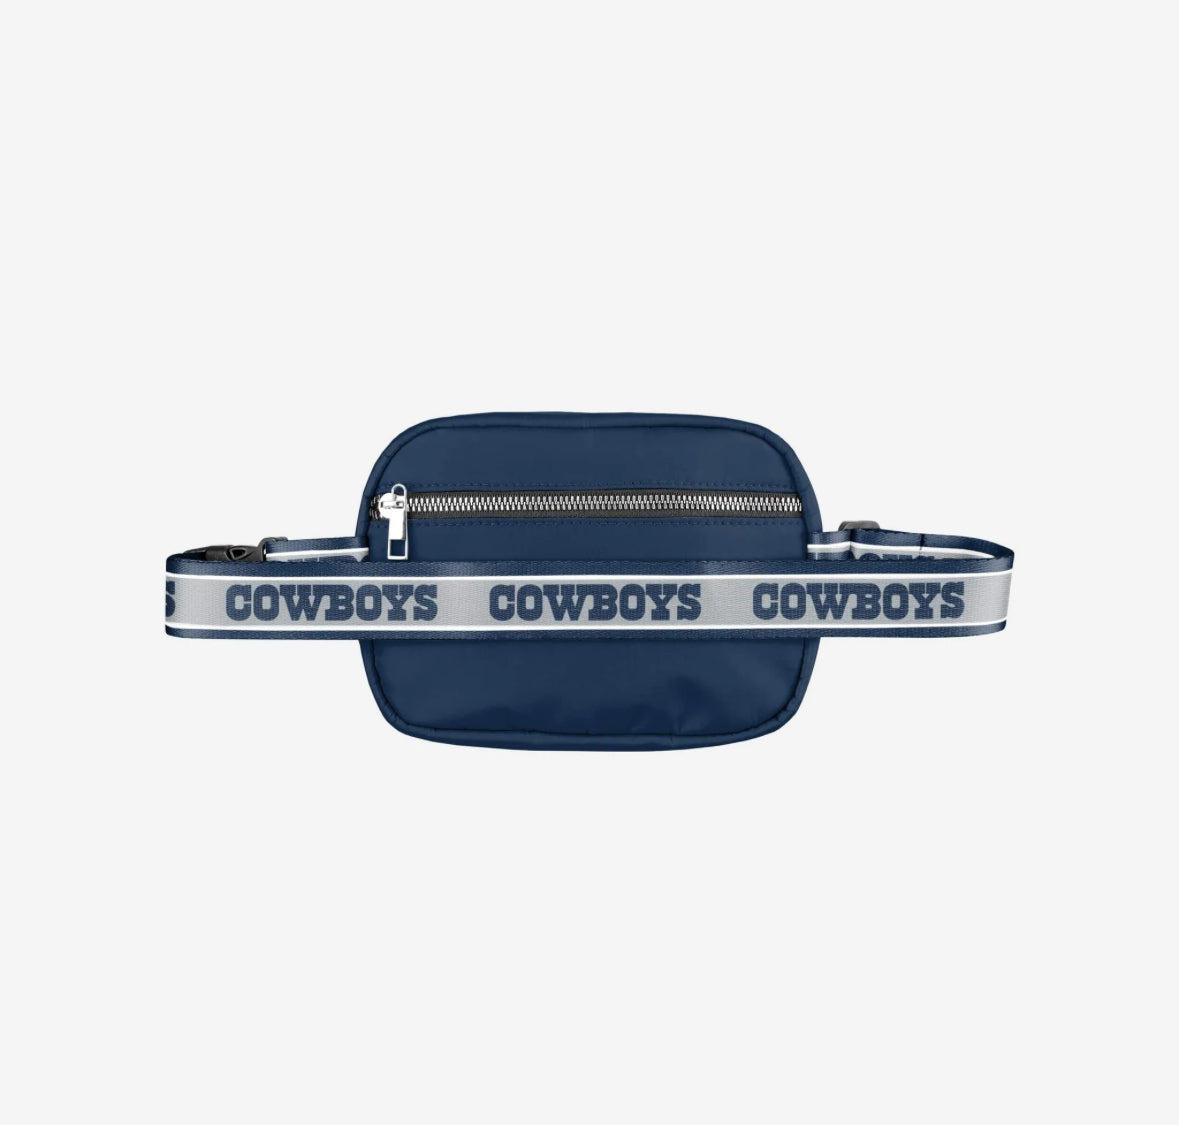 Cowboys Small NFL Unisex-Adult NFL Team Color Crossbody Belt Bag